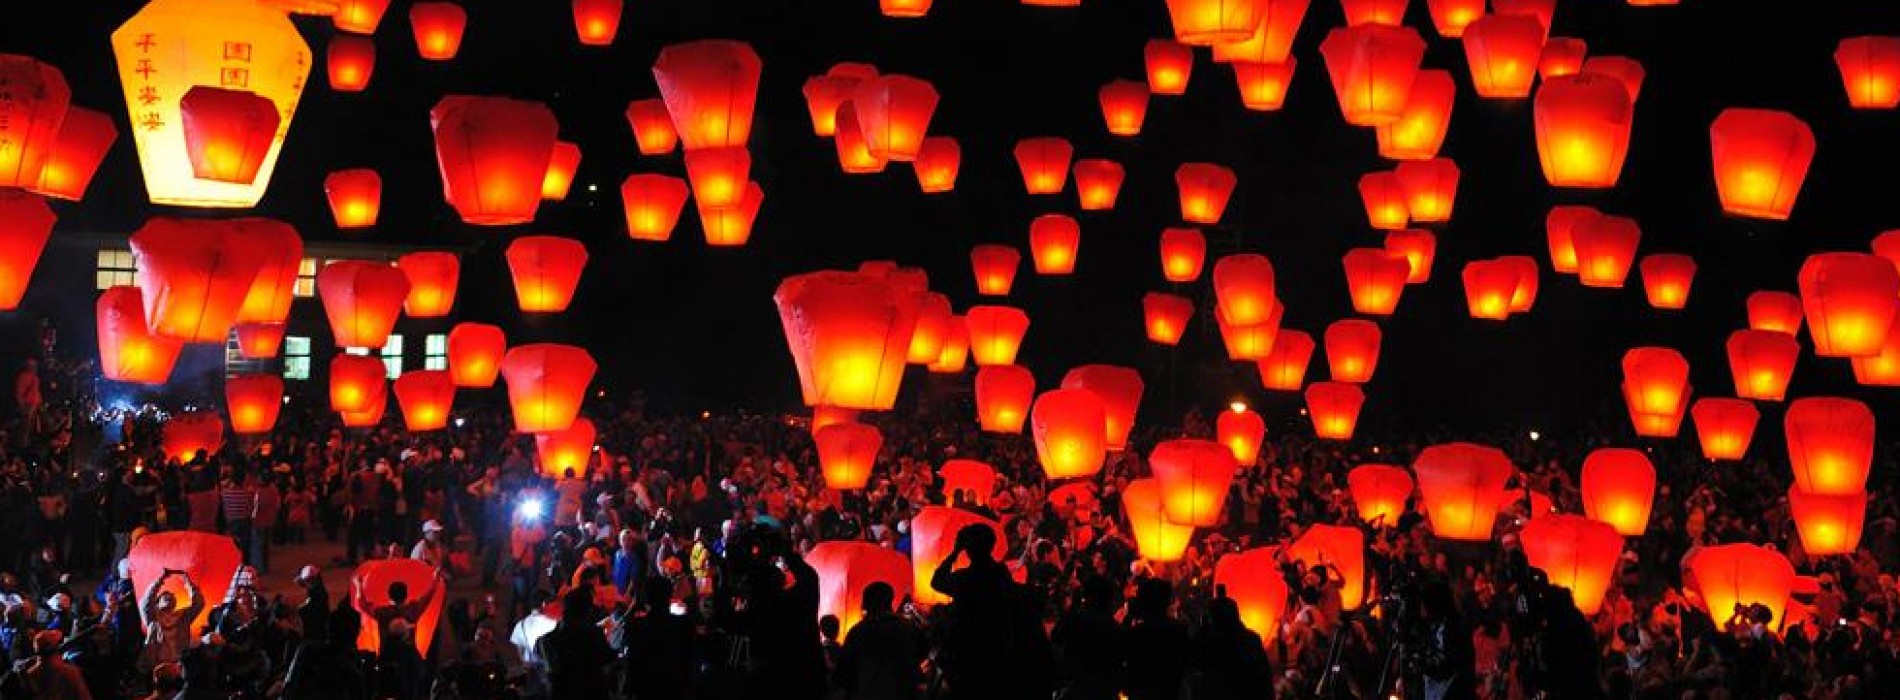 Celebrate the 2018 Taiwan Lantern Festival!